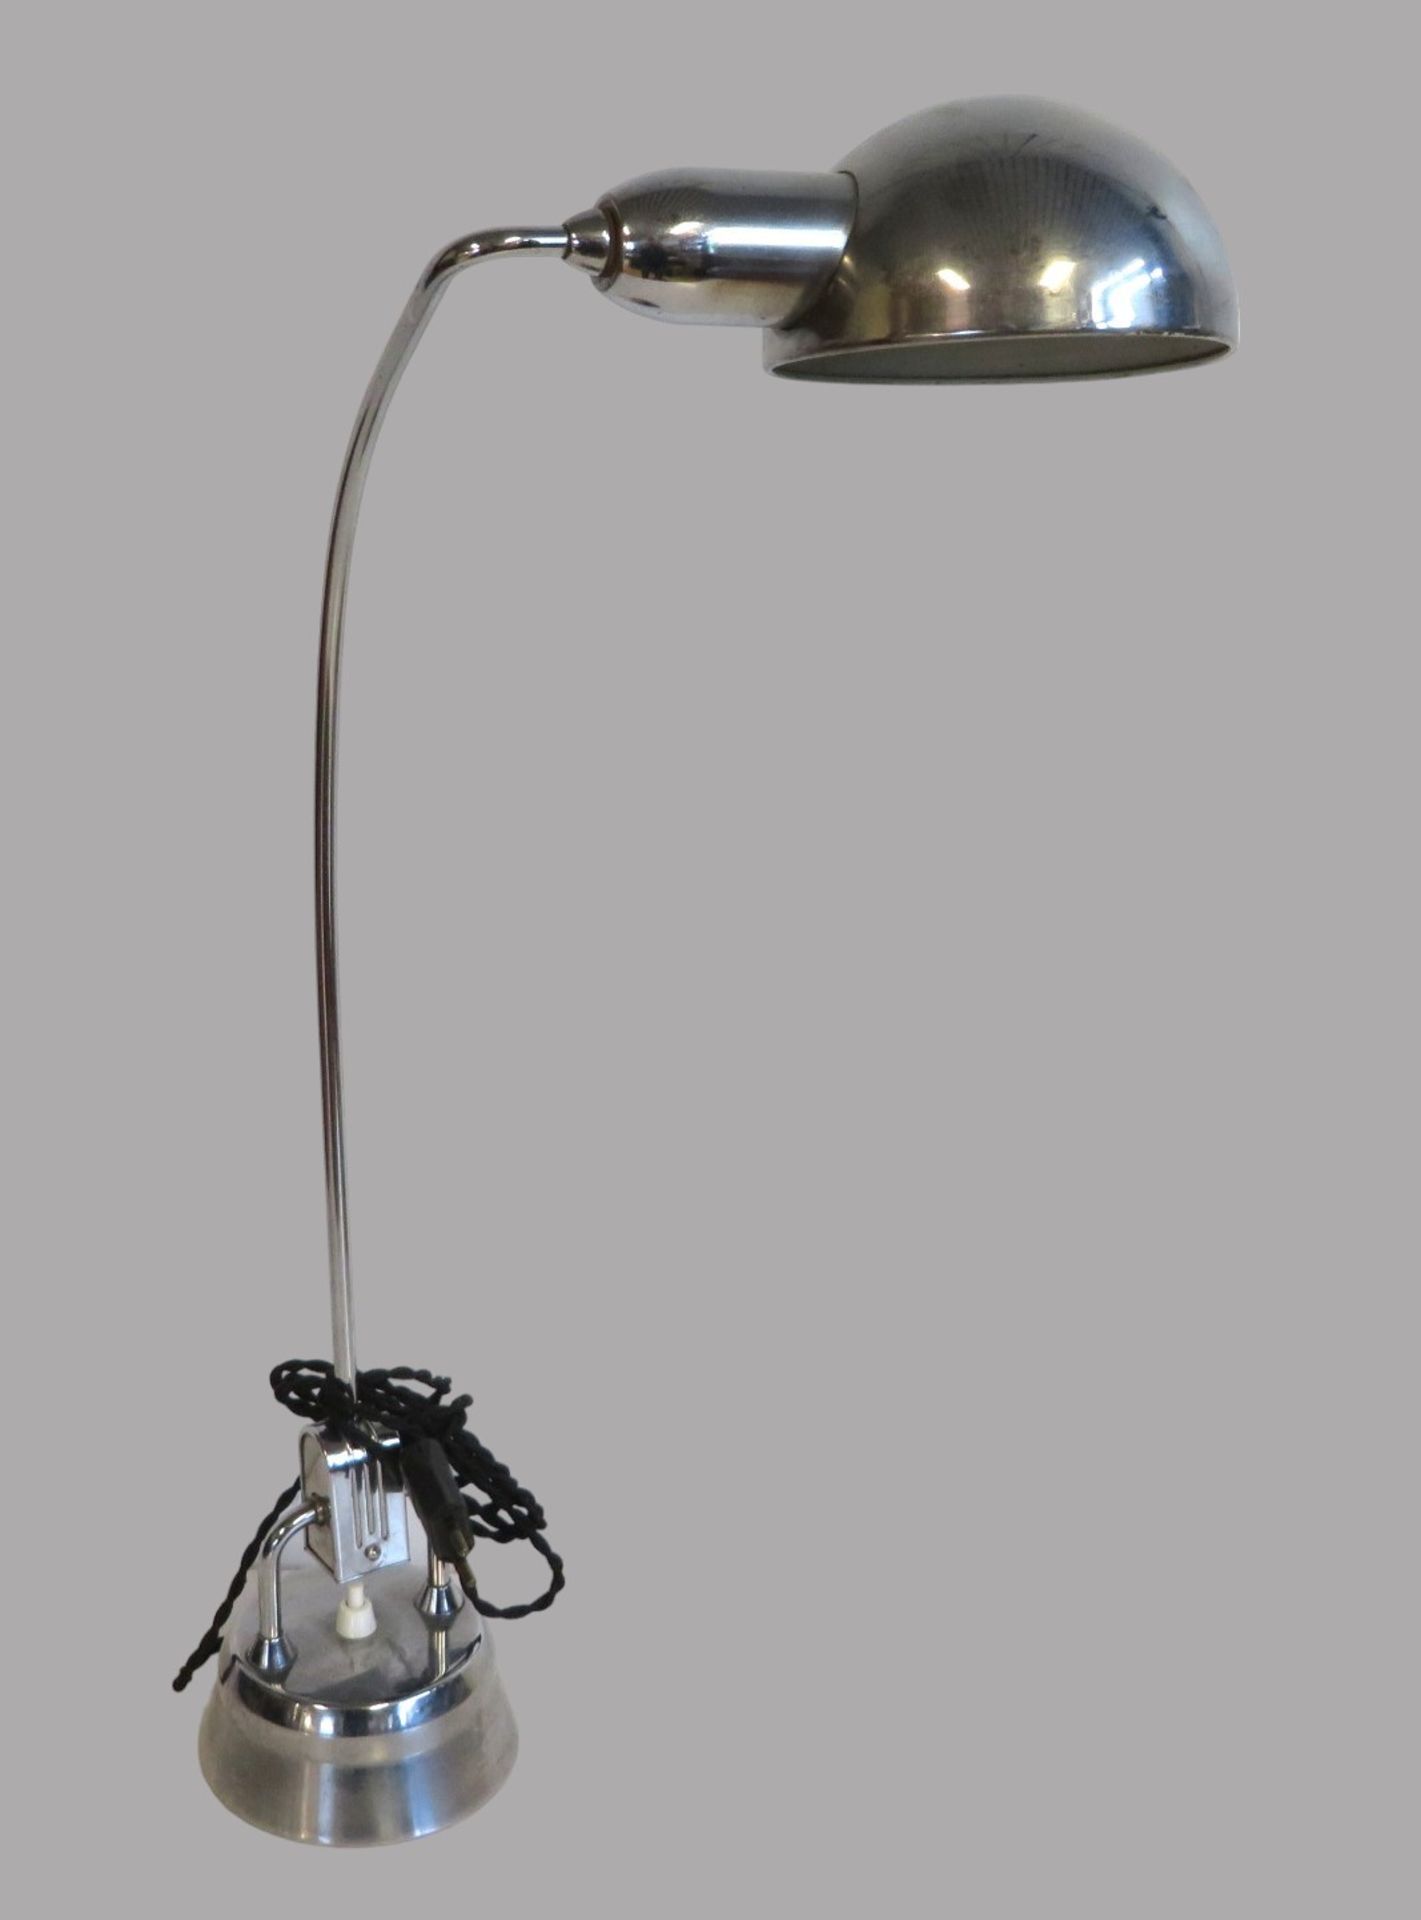 Vintage Tischlampe, 1950er Jahre, Chrom, h 59 cm, d 28 cm.